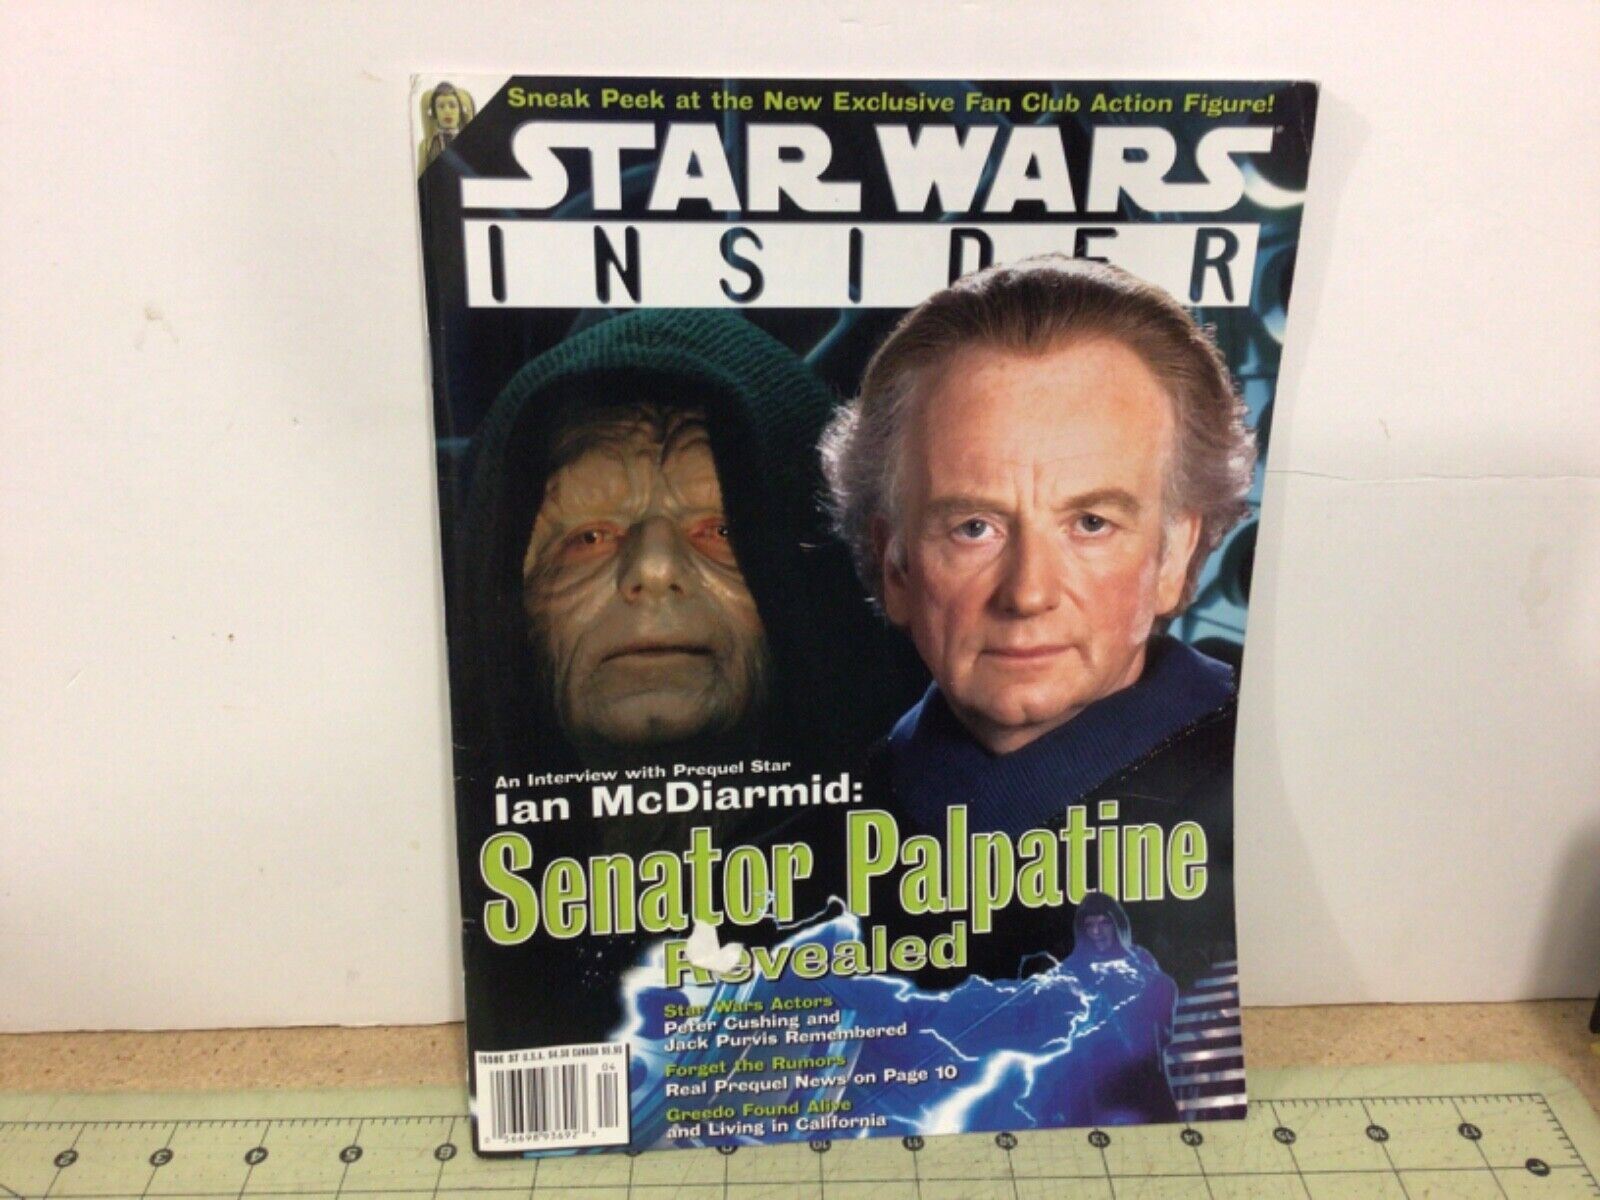 Star Wars Insider “Senator Palpatine Revealed” magazine #37 